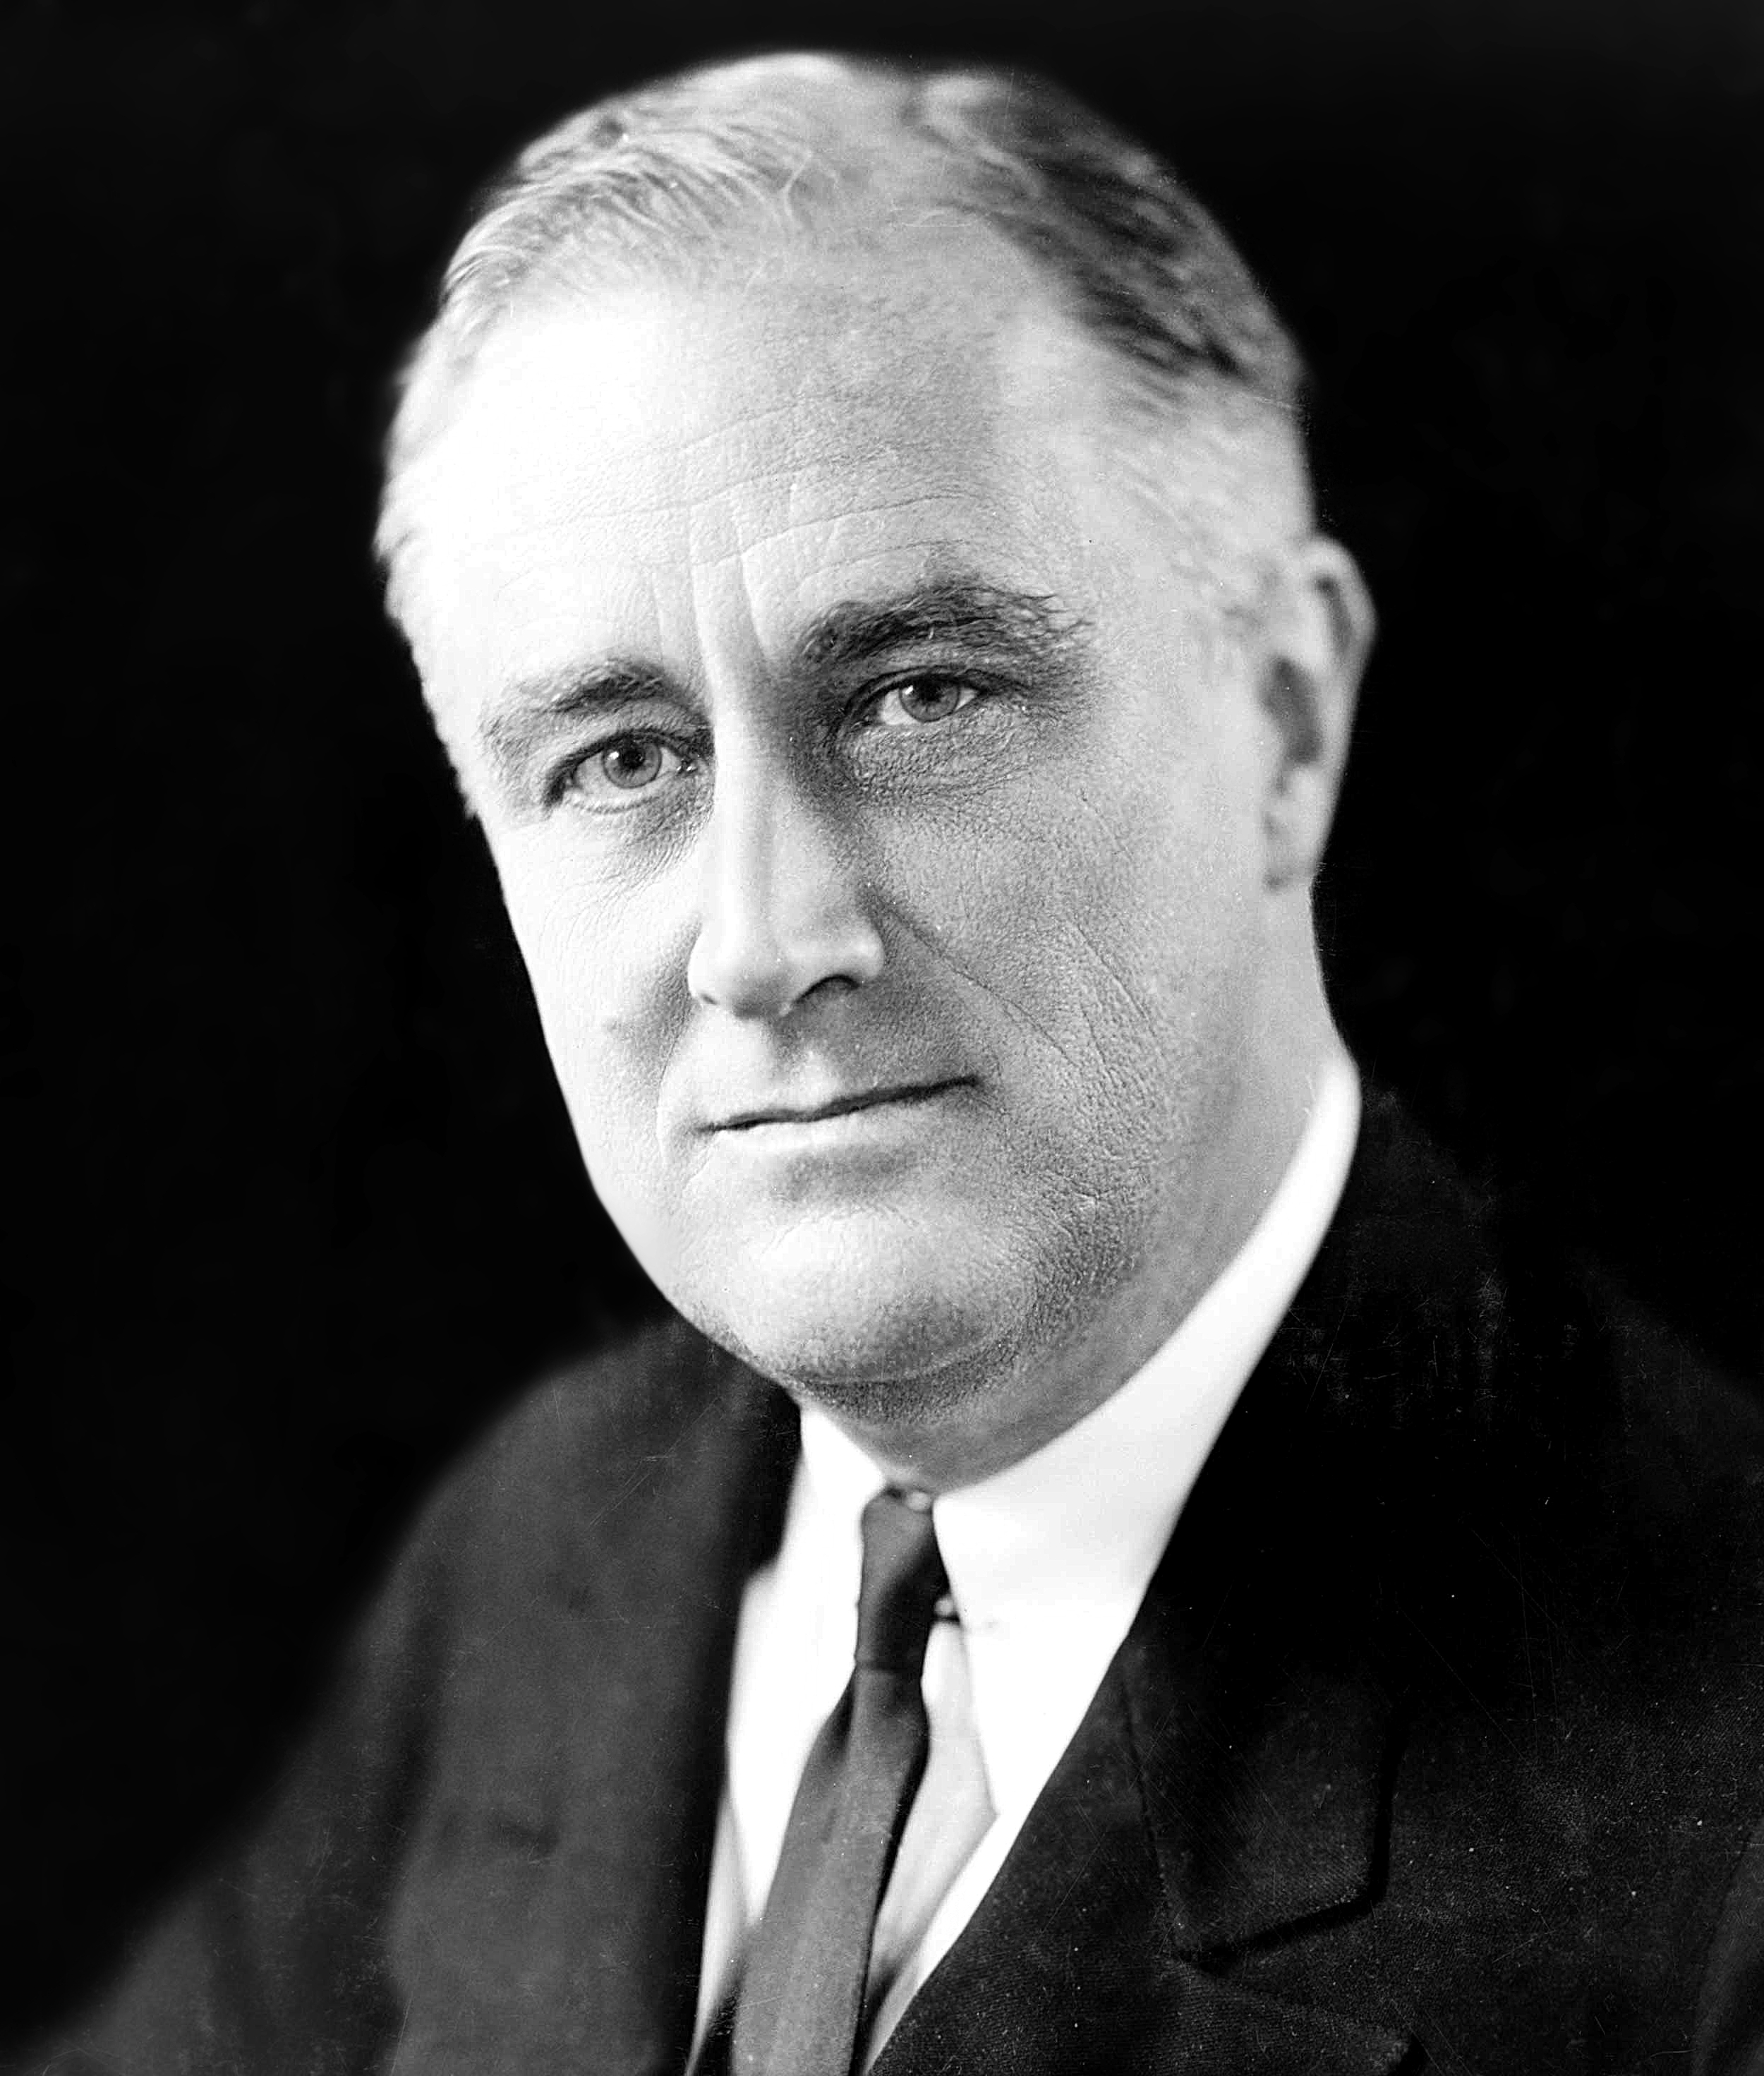 https://upload.wikimedia.org/wikipedia/commons/b/b8/FDR_in_1933.jpg